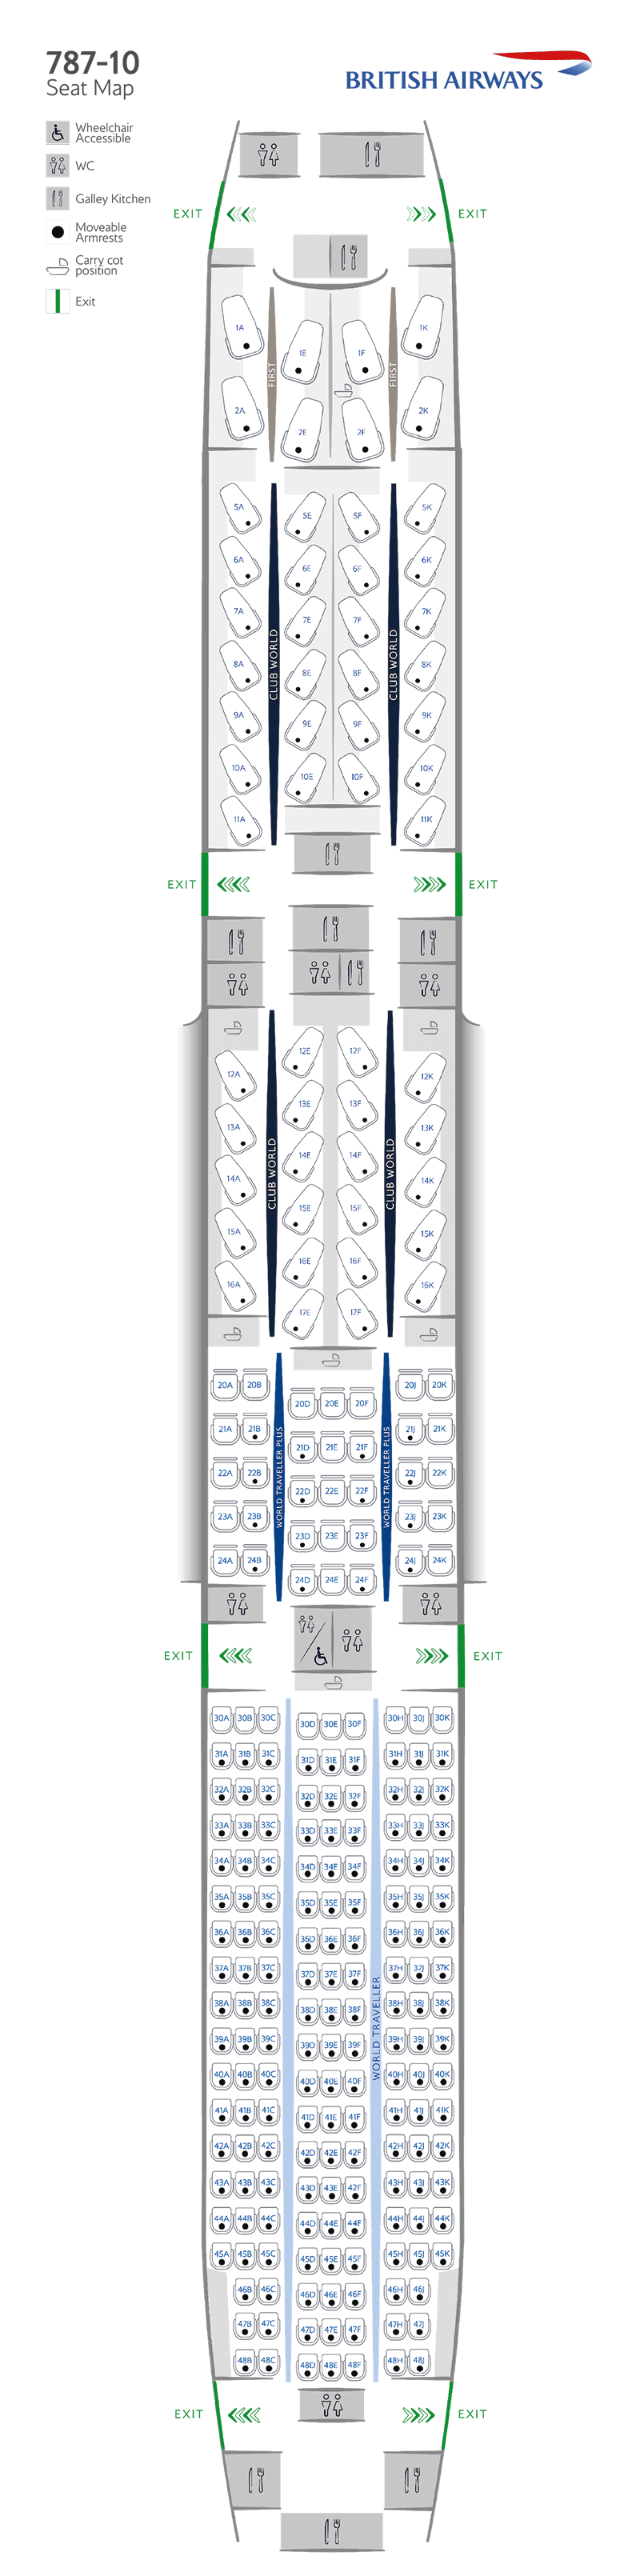 Plan de cabine du Boeing 787-10